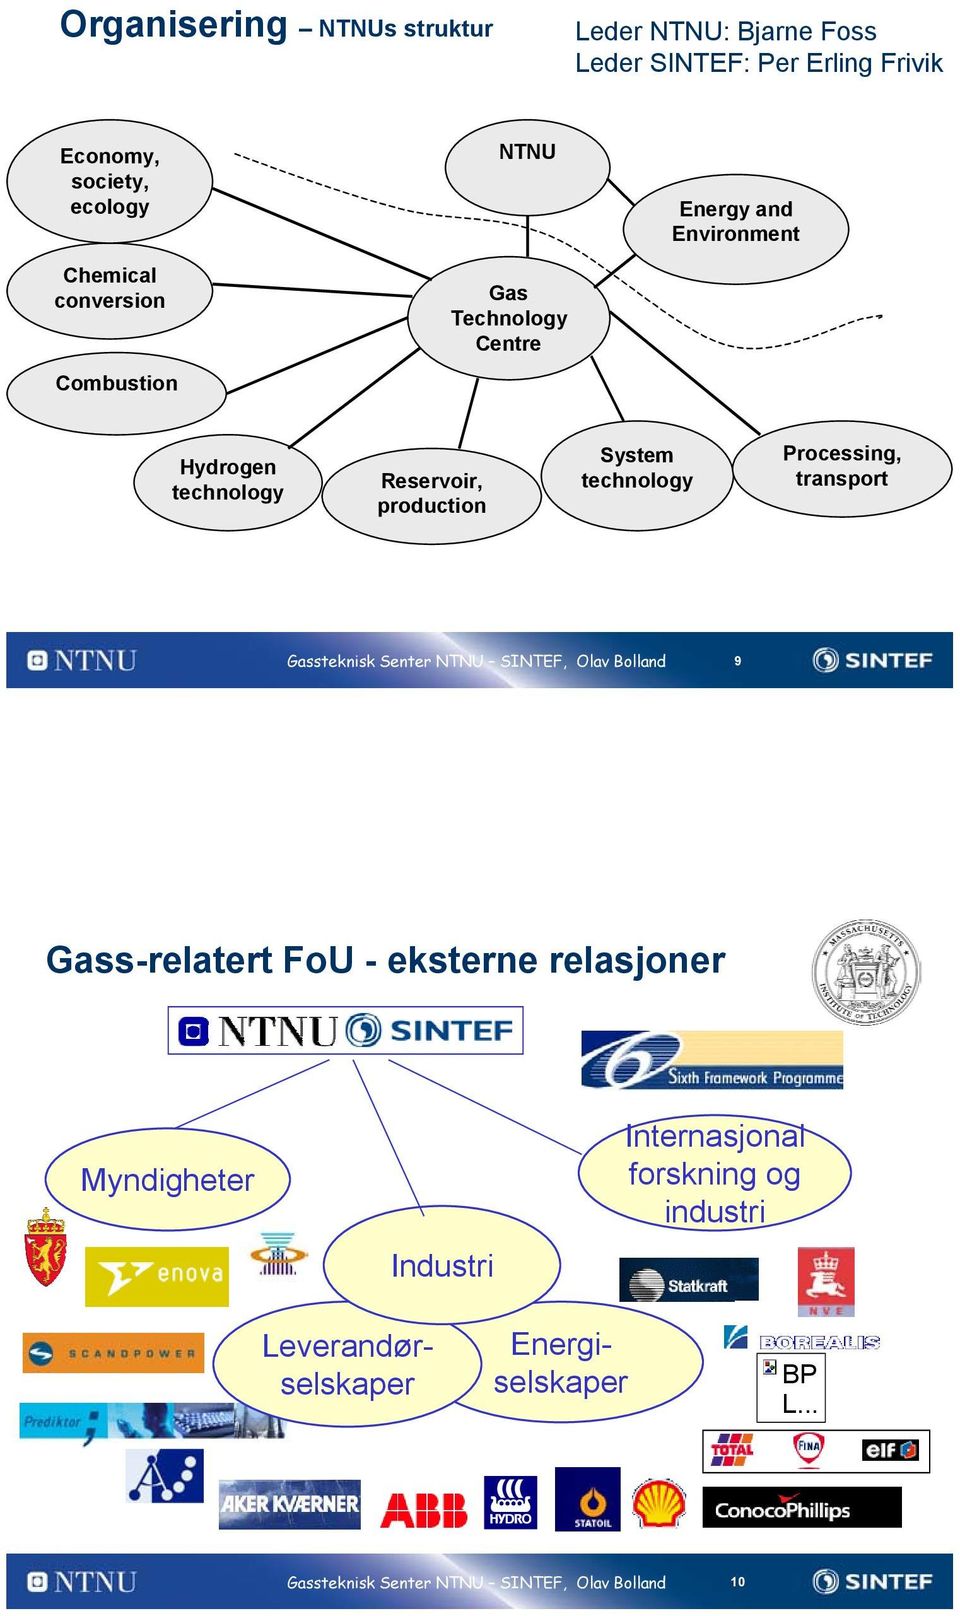 technology Reservoir, production System technology Processing, transport 9 Gass-relatert FoU - eksterne